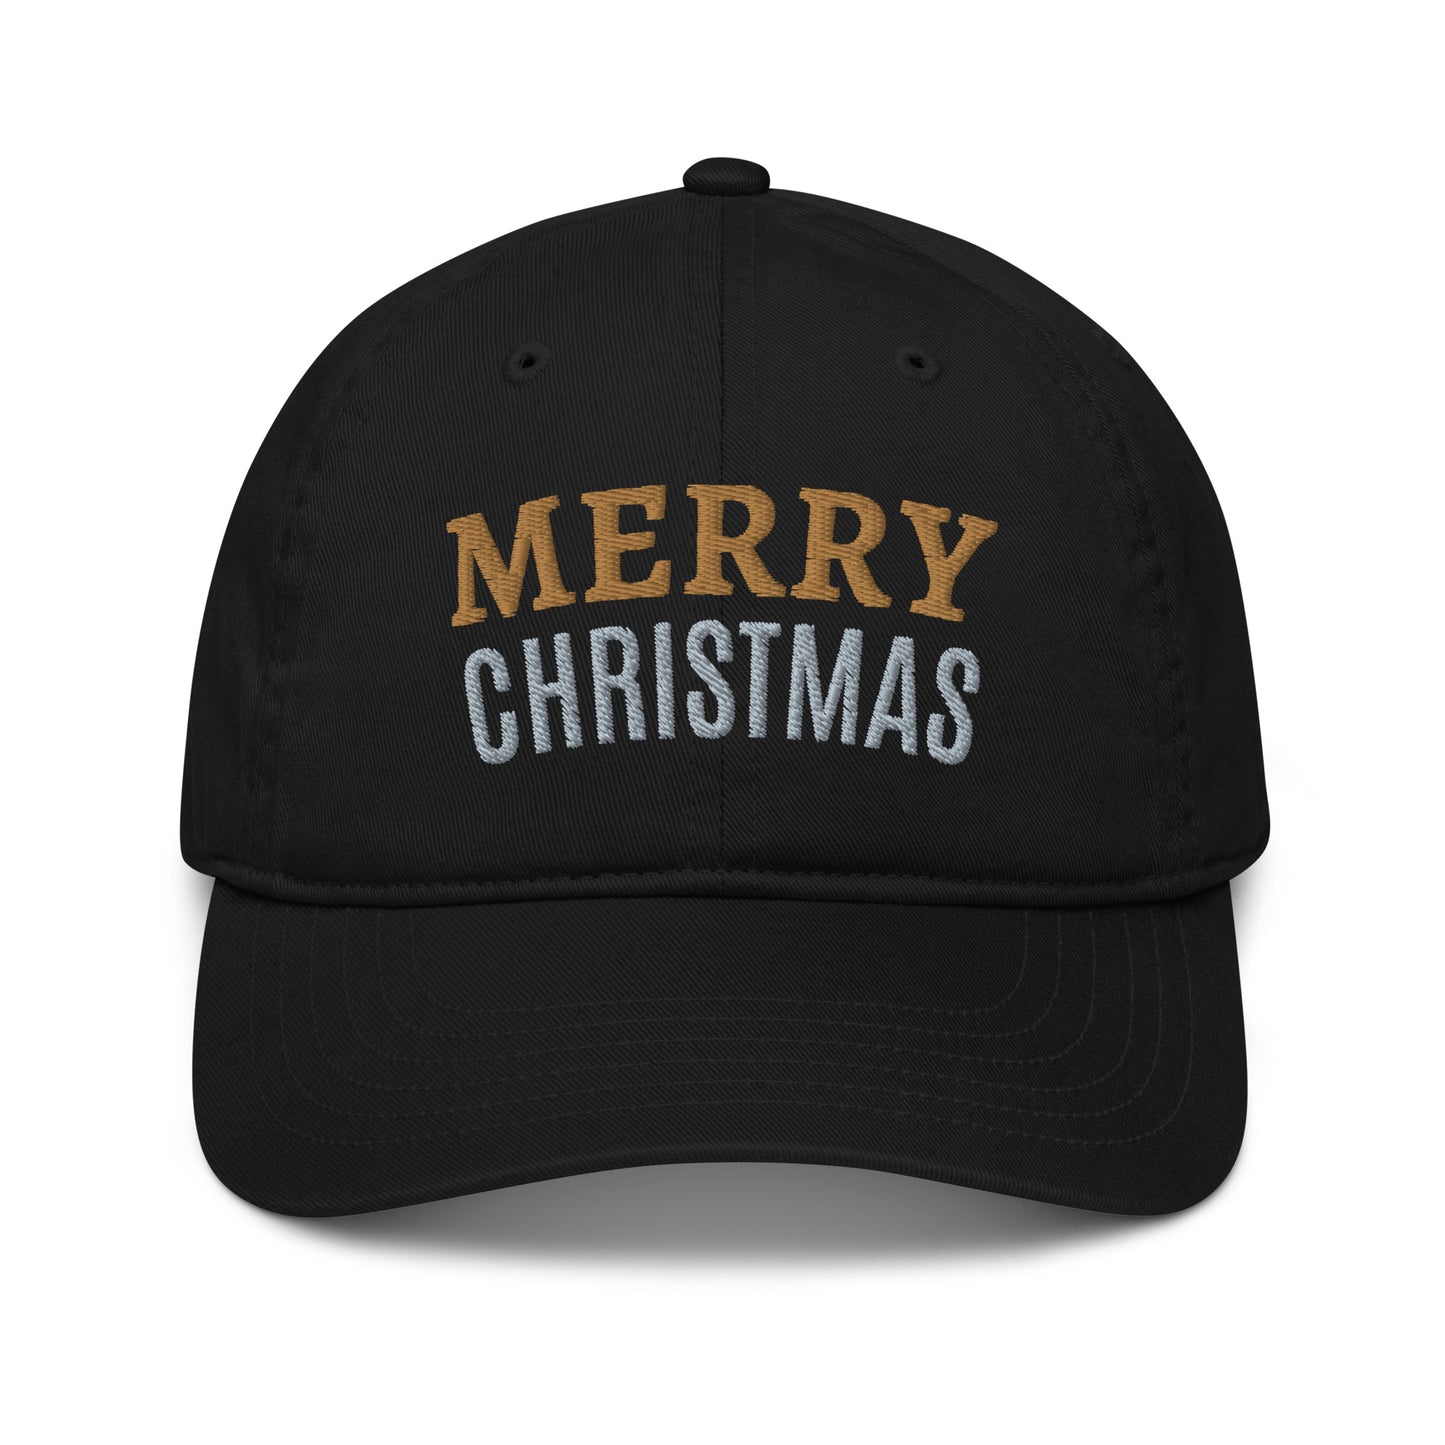 Christmas hat / Sombrero navideño